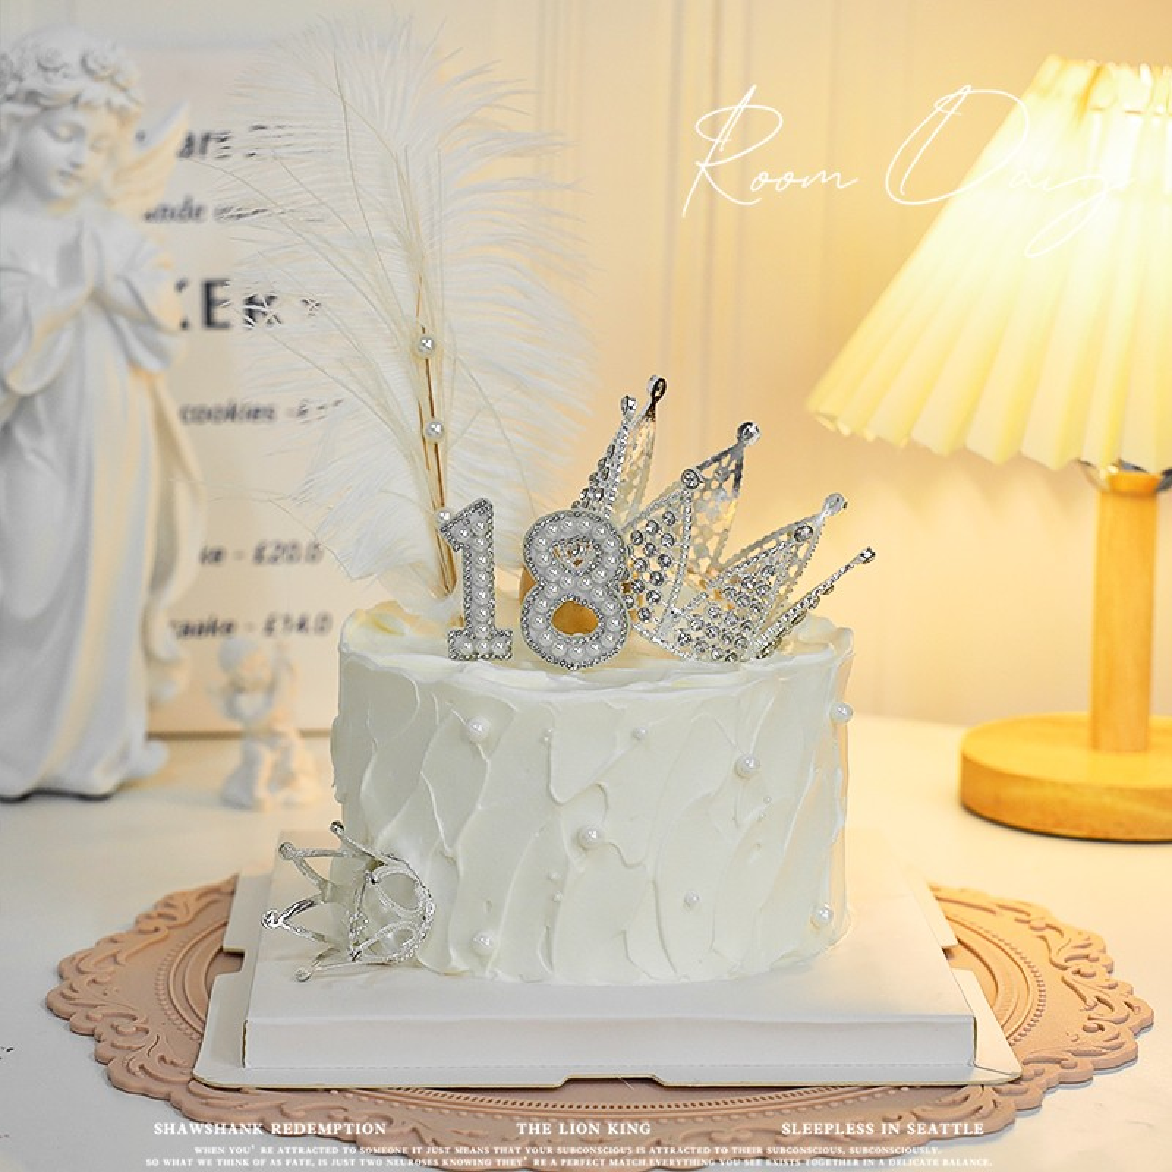 Cake Topper, Cupcake Decoration  - Decorative glitter & white Pearl - Number 5 - Rampant Coffee Company